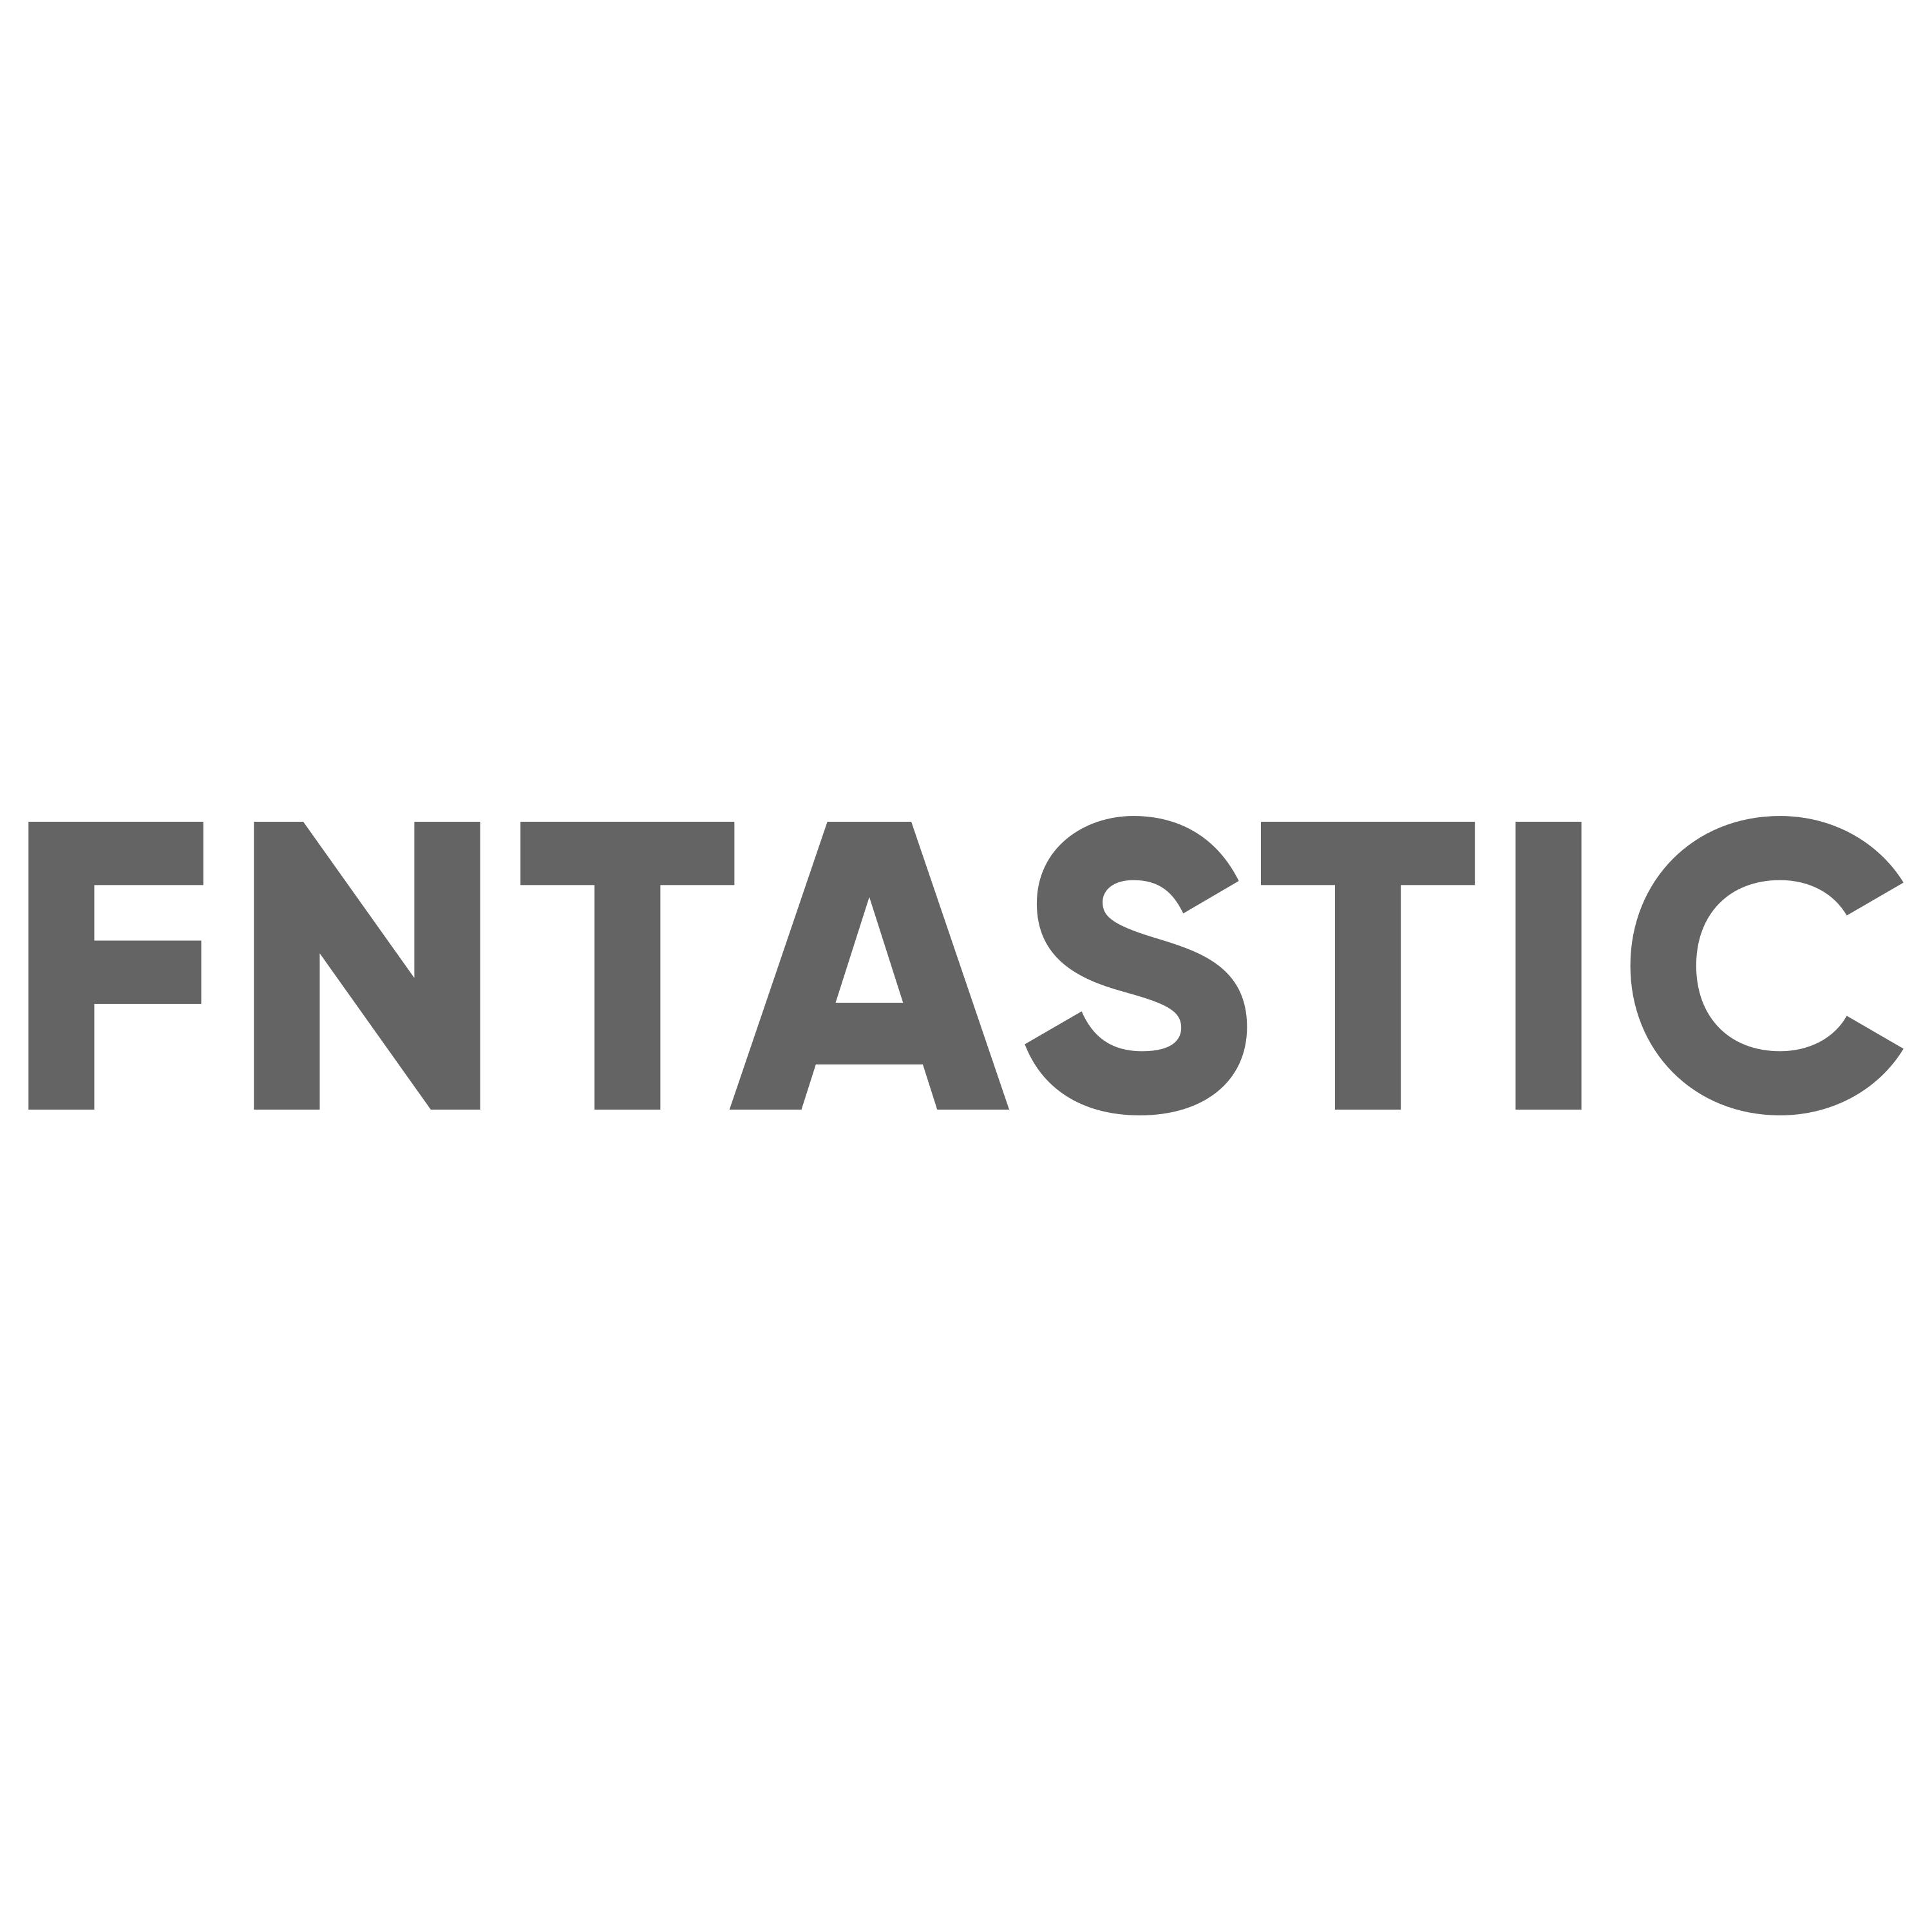 Fntastic Logo Transparent Photo